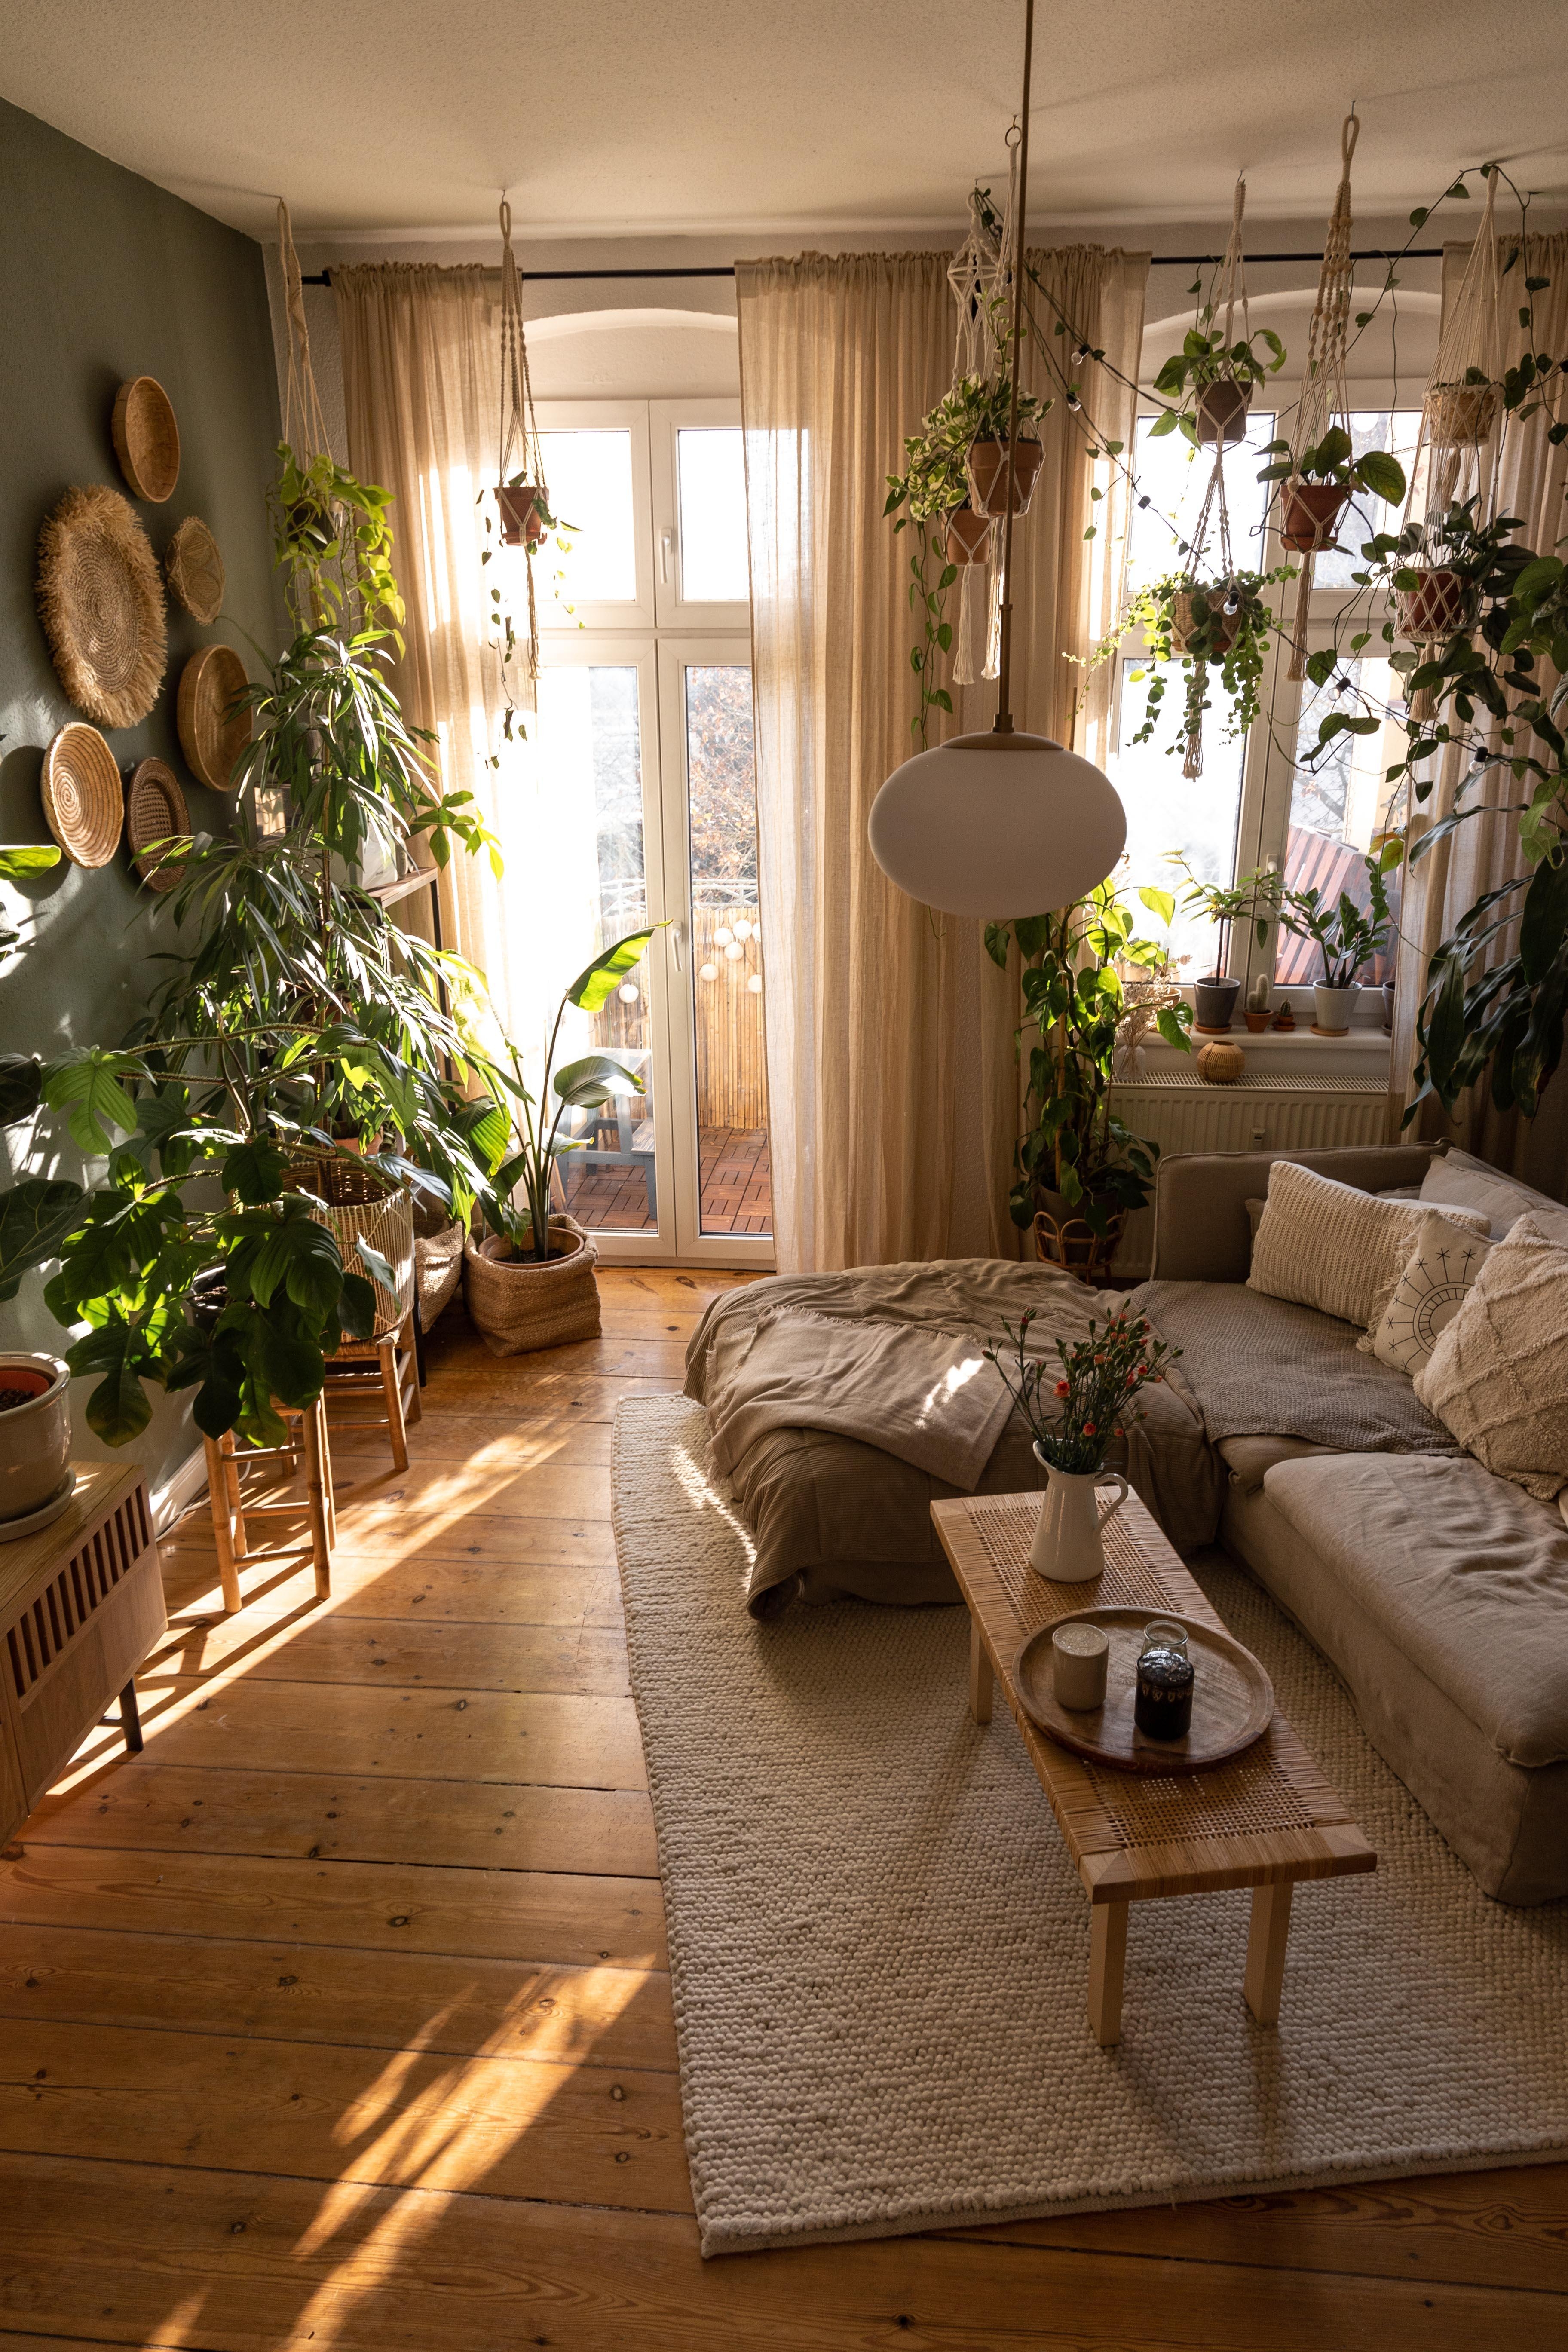 #wohnzimmer #wohnideen #livingroom #mylivingroom #livingroominspo #cozyhome #interior #urbanjungle #indoorplants